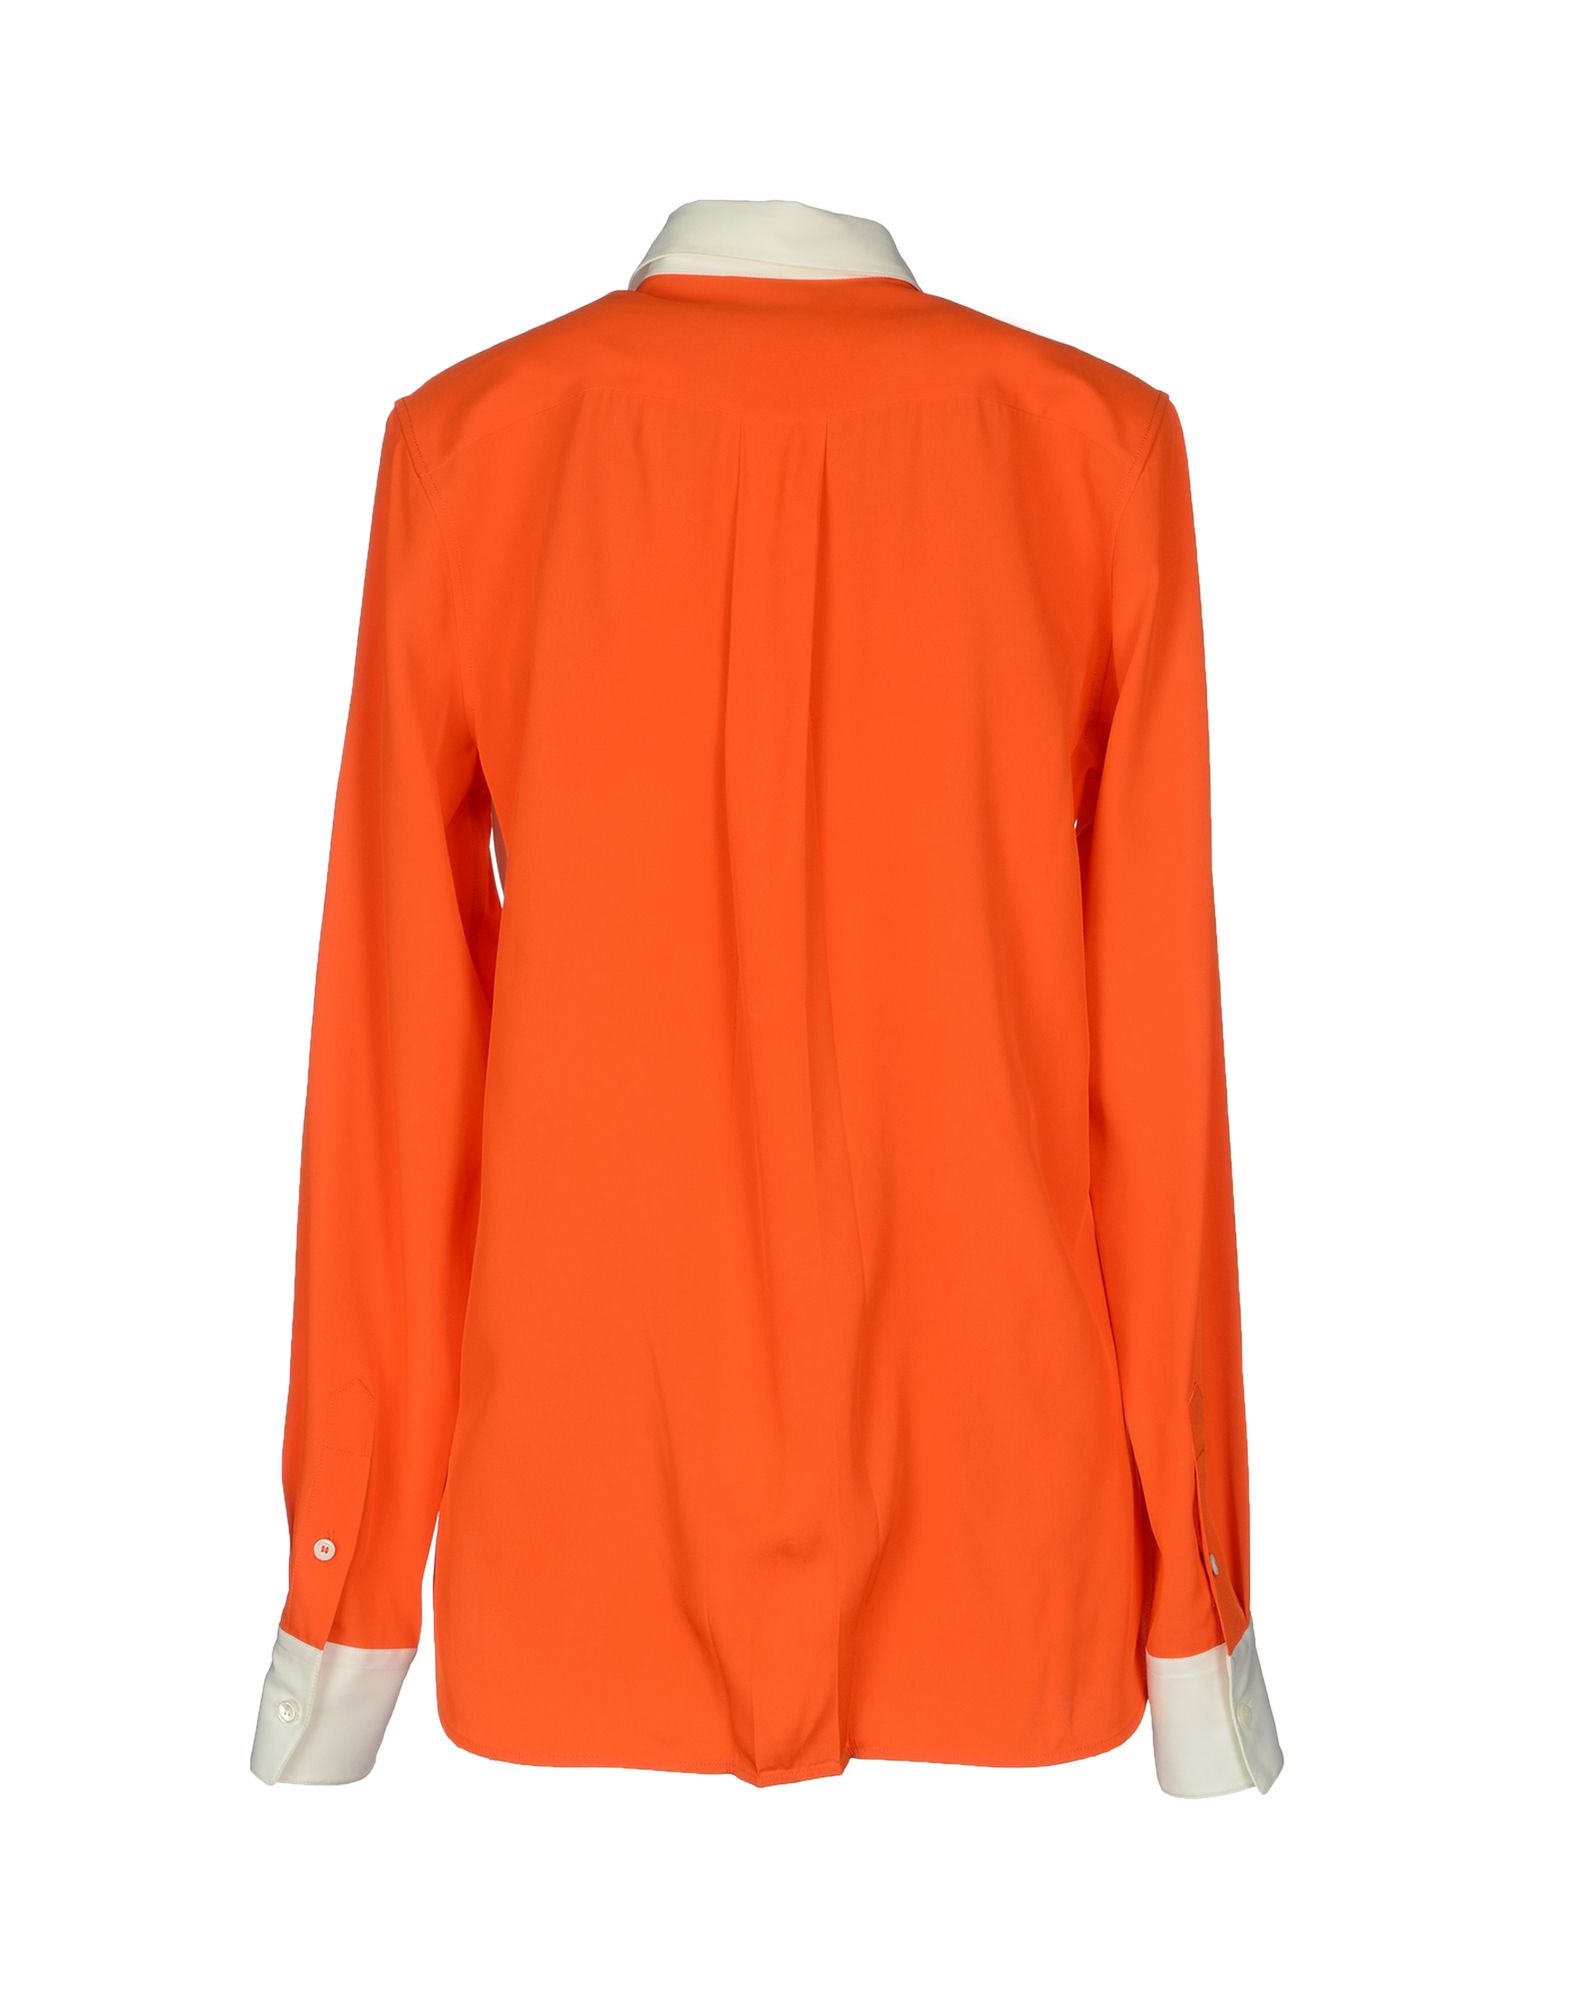 Celine Long Sleeve Shirt in Orange - Lyst